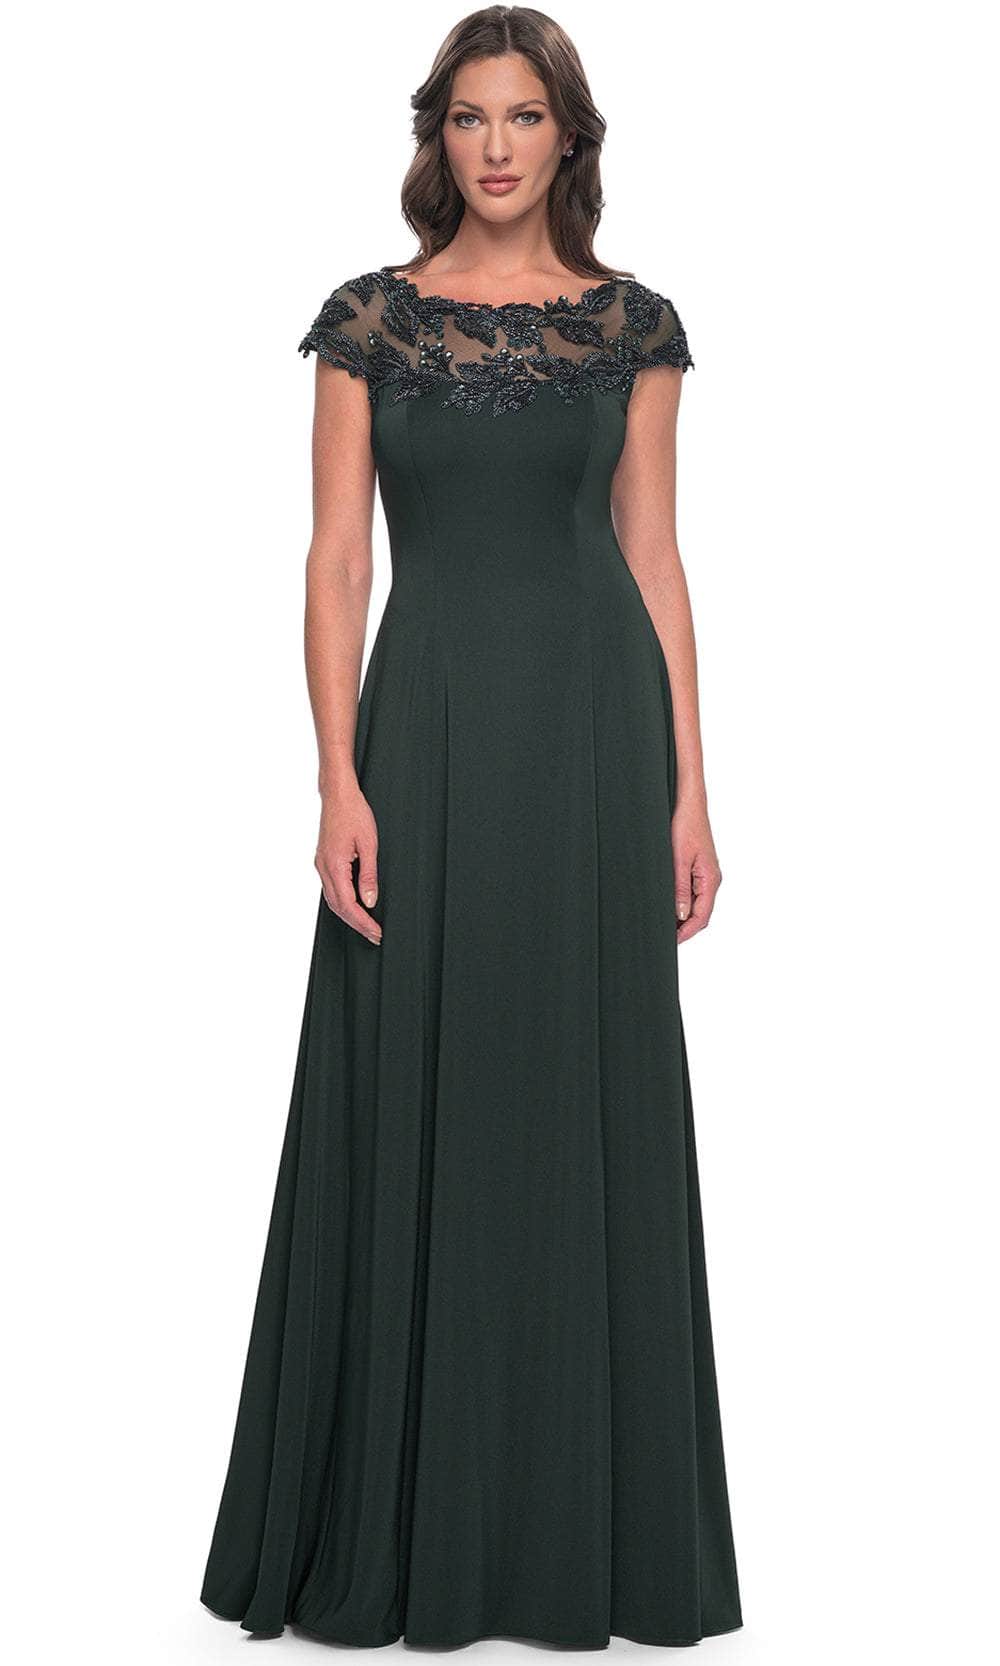 Image of La Femme 31195 - Cap Sleeve Applique Evening Dress